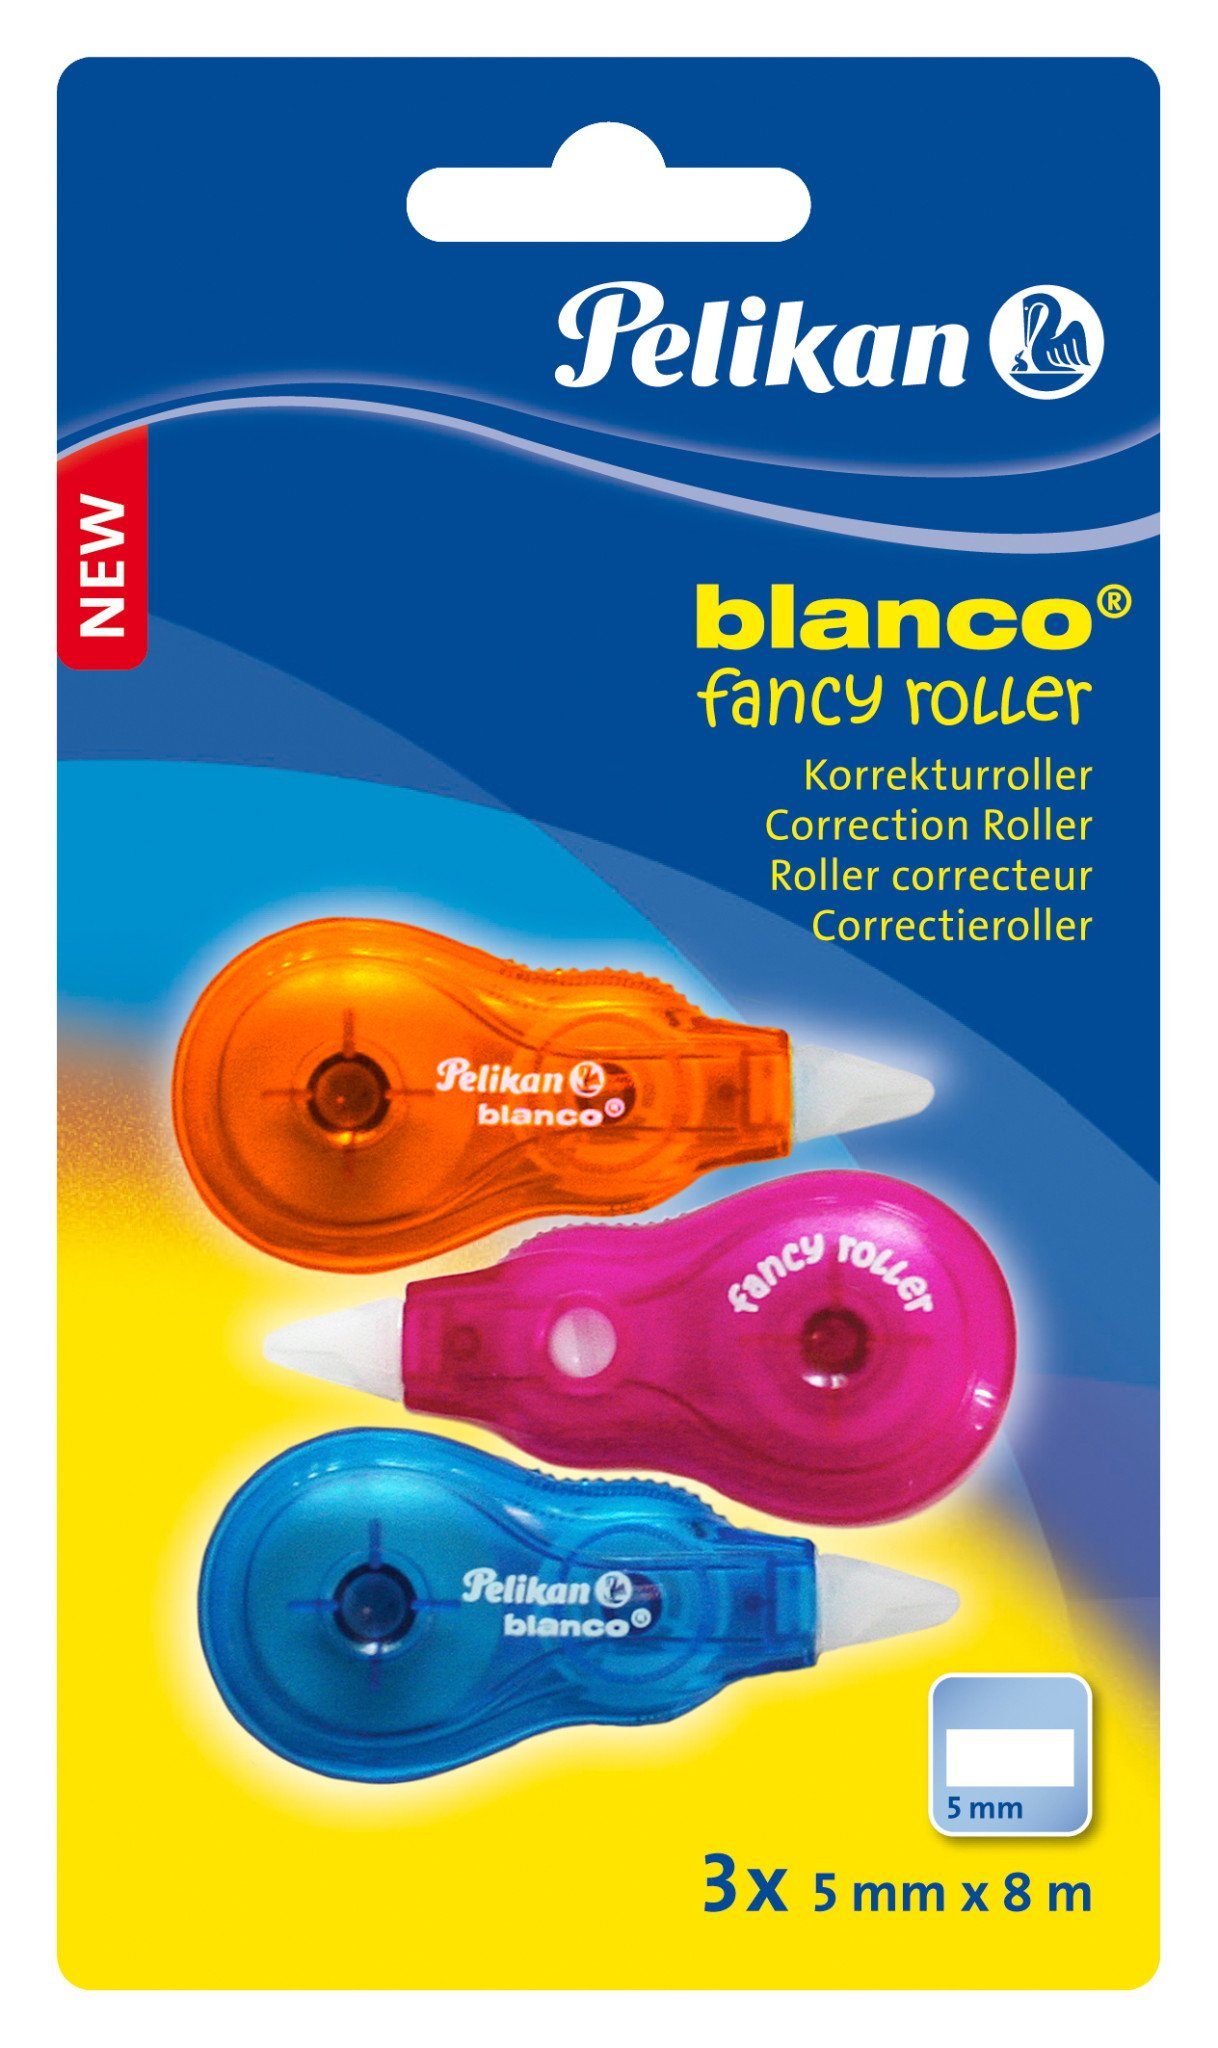 Pelikan Tintenkiller Korrekturroller blanco Fancy Blau/Pink/Orange 3er Set 5 mm Bandbreite